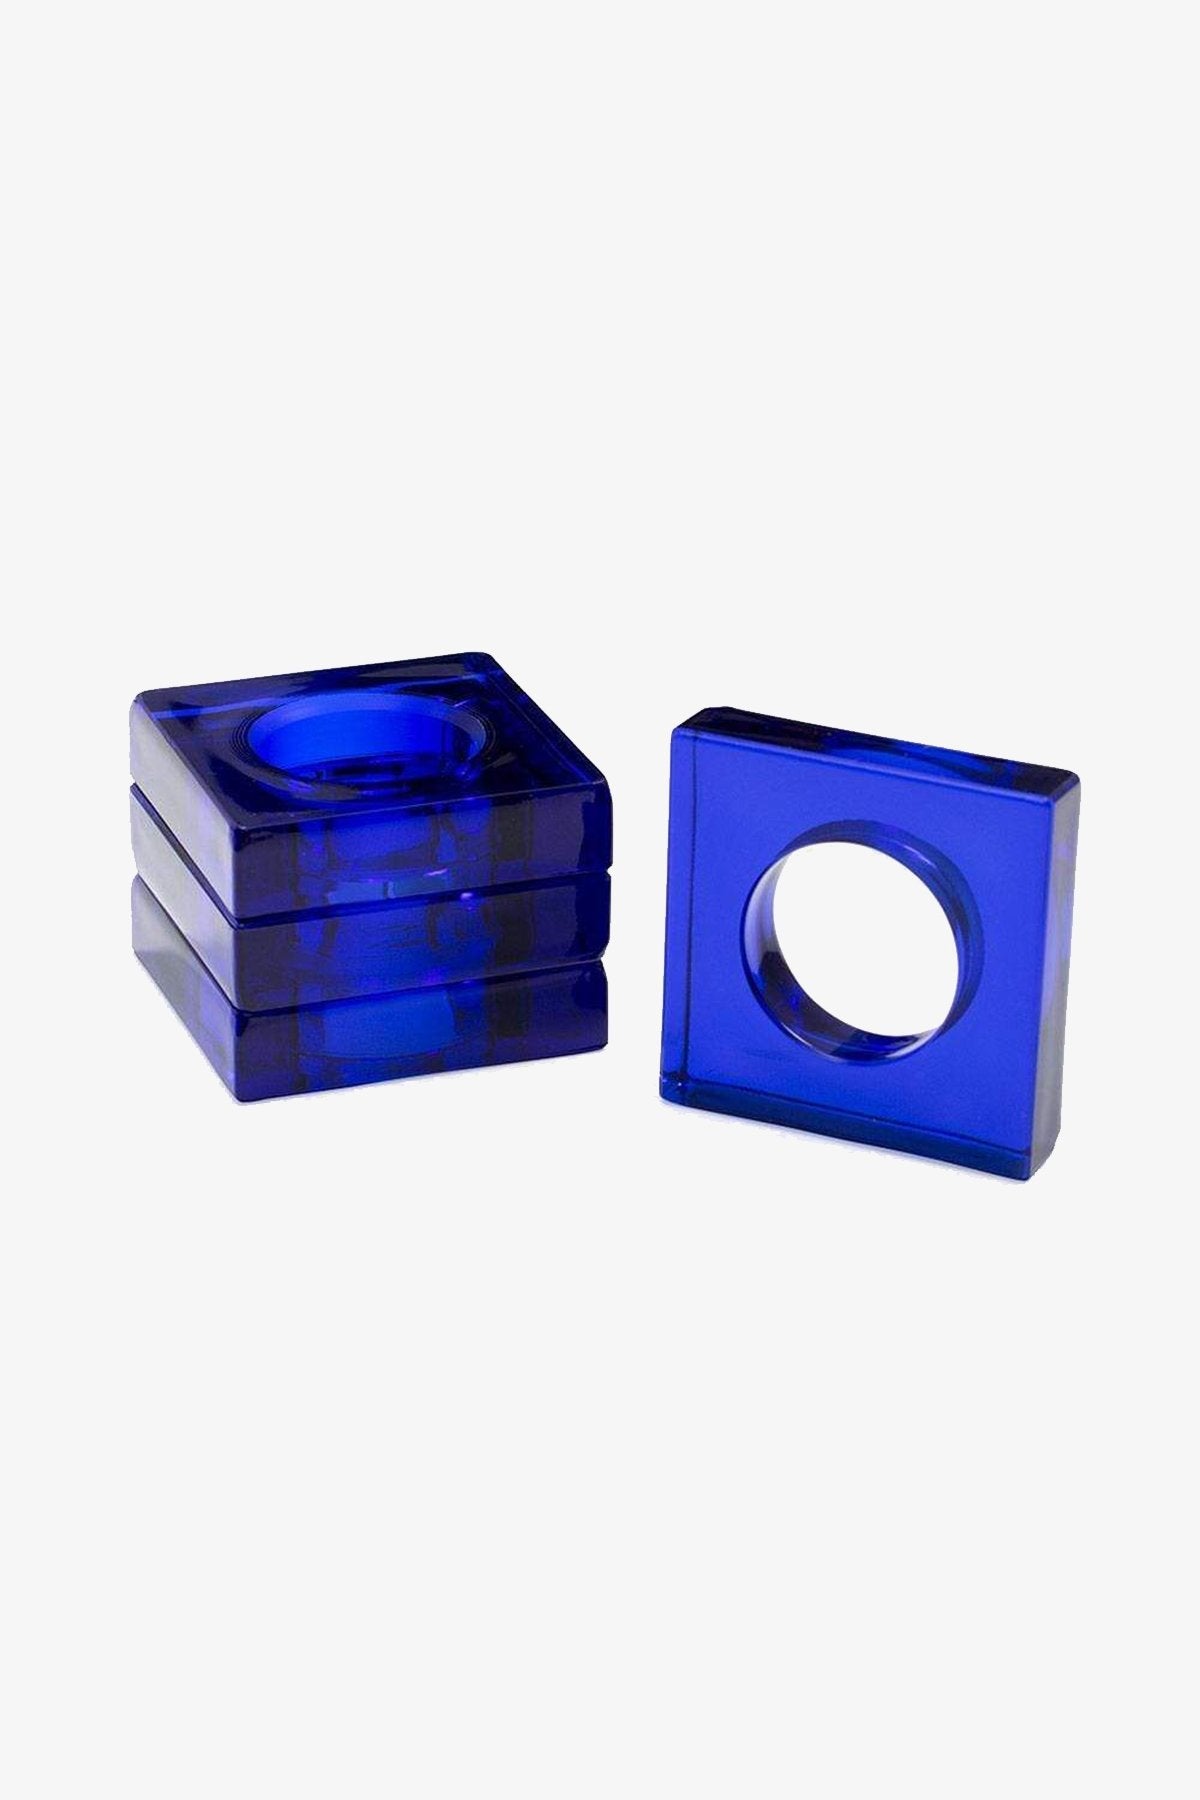 Acrylic Napkin Rings in Cobalt - Set of 4 - shop-olivia.com